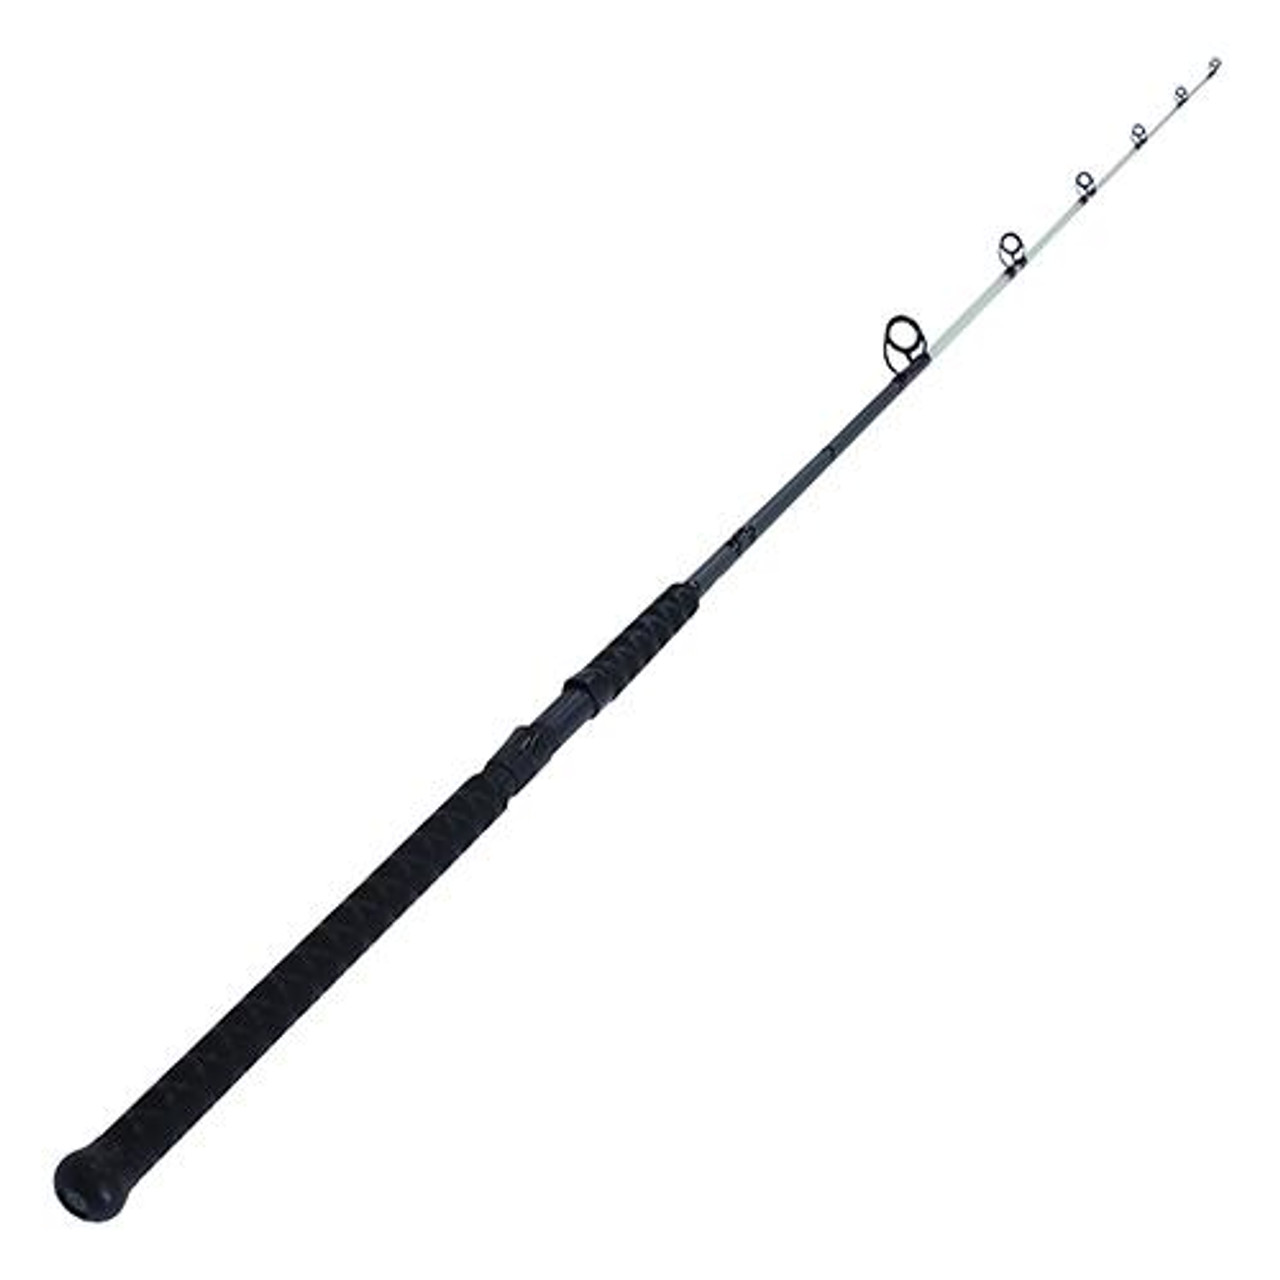 Berkley Glowstik Spinning Rod 8 Length, 2 Piece Rod, 12-30 lb Line